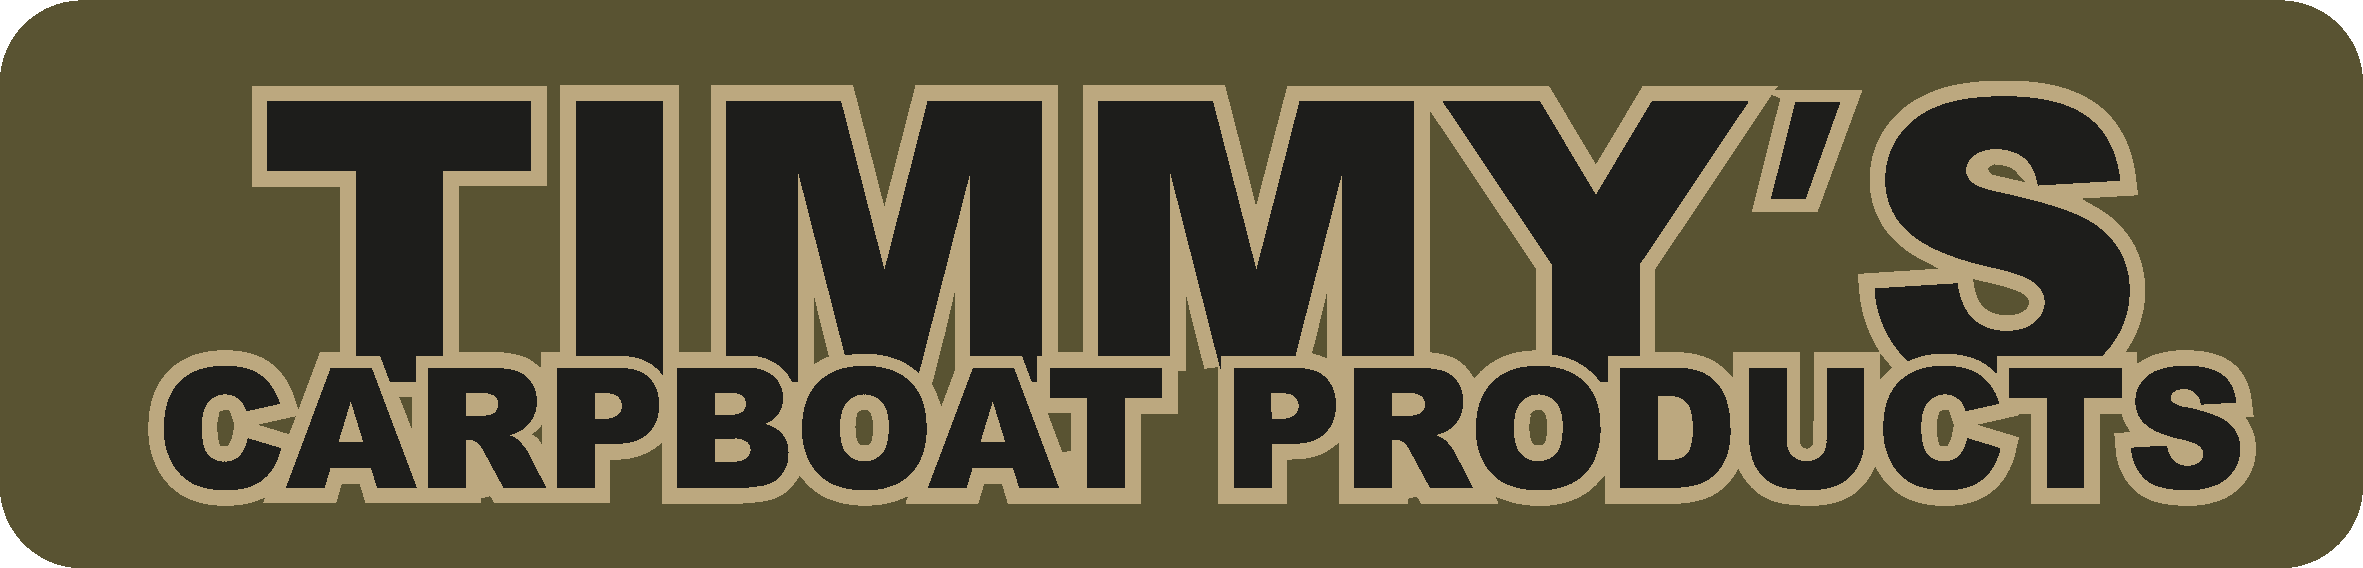 timmy's carpboat products logo